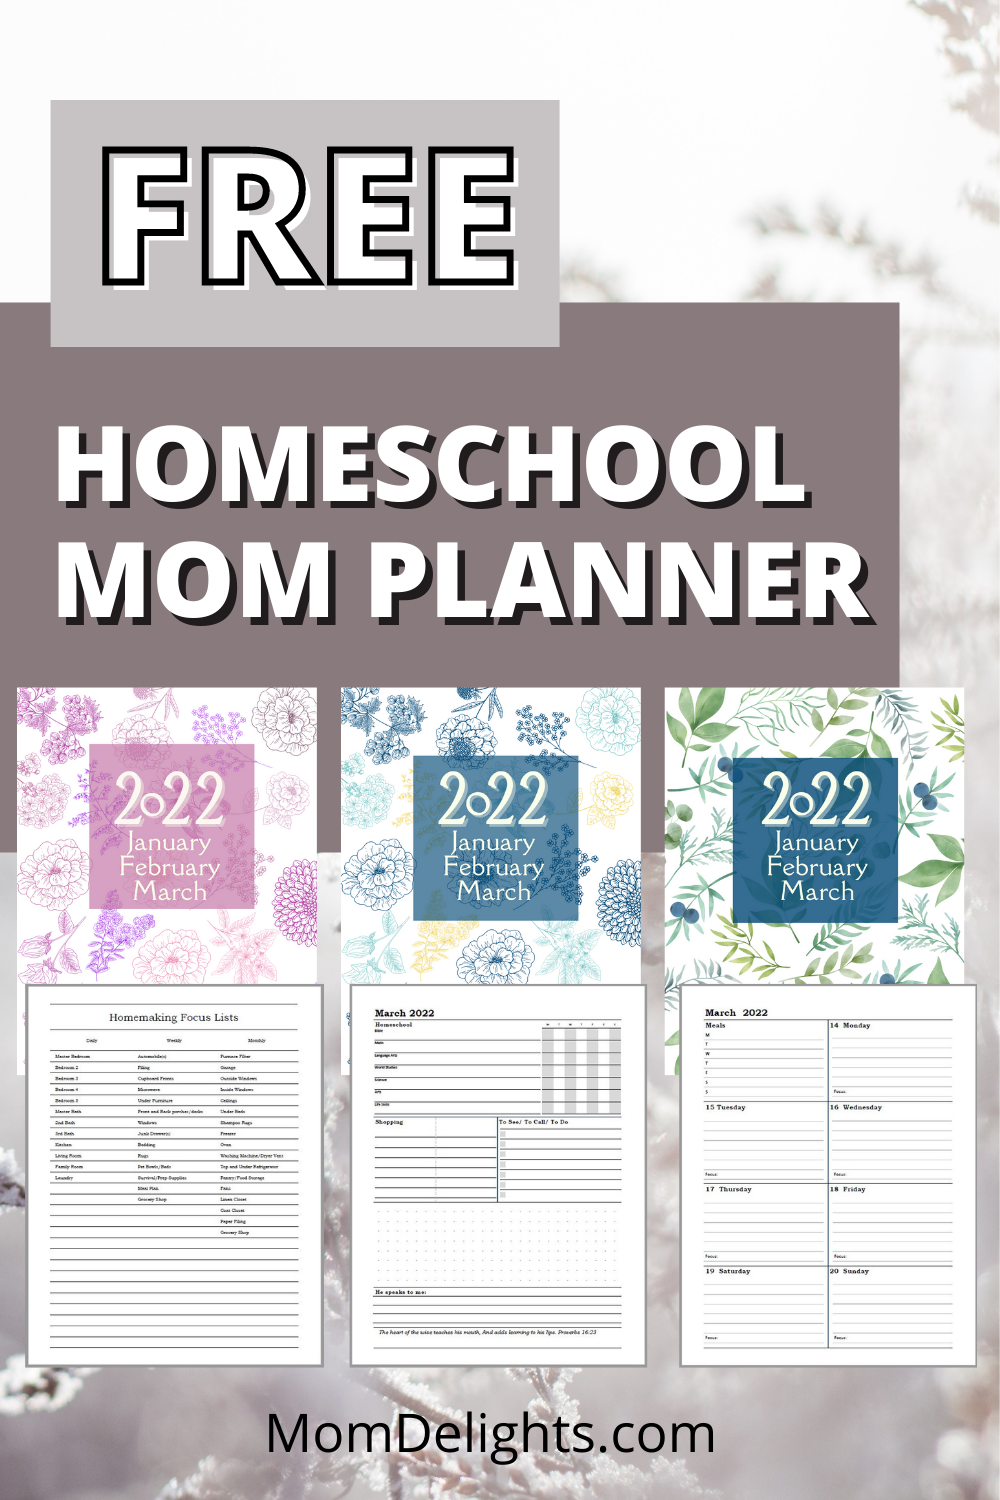 Homeschool Mom Planner Freebie for 2022 • Mom Delights